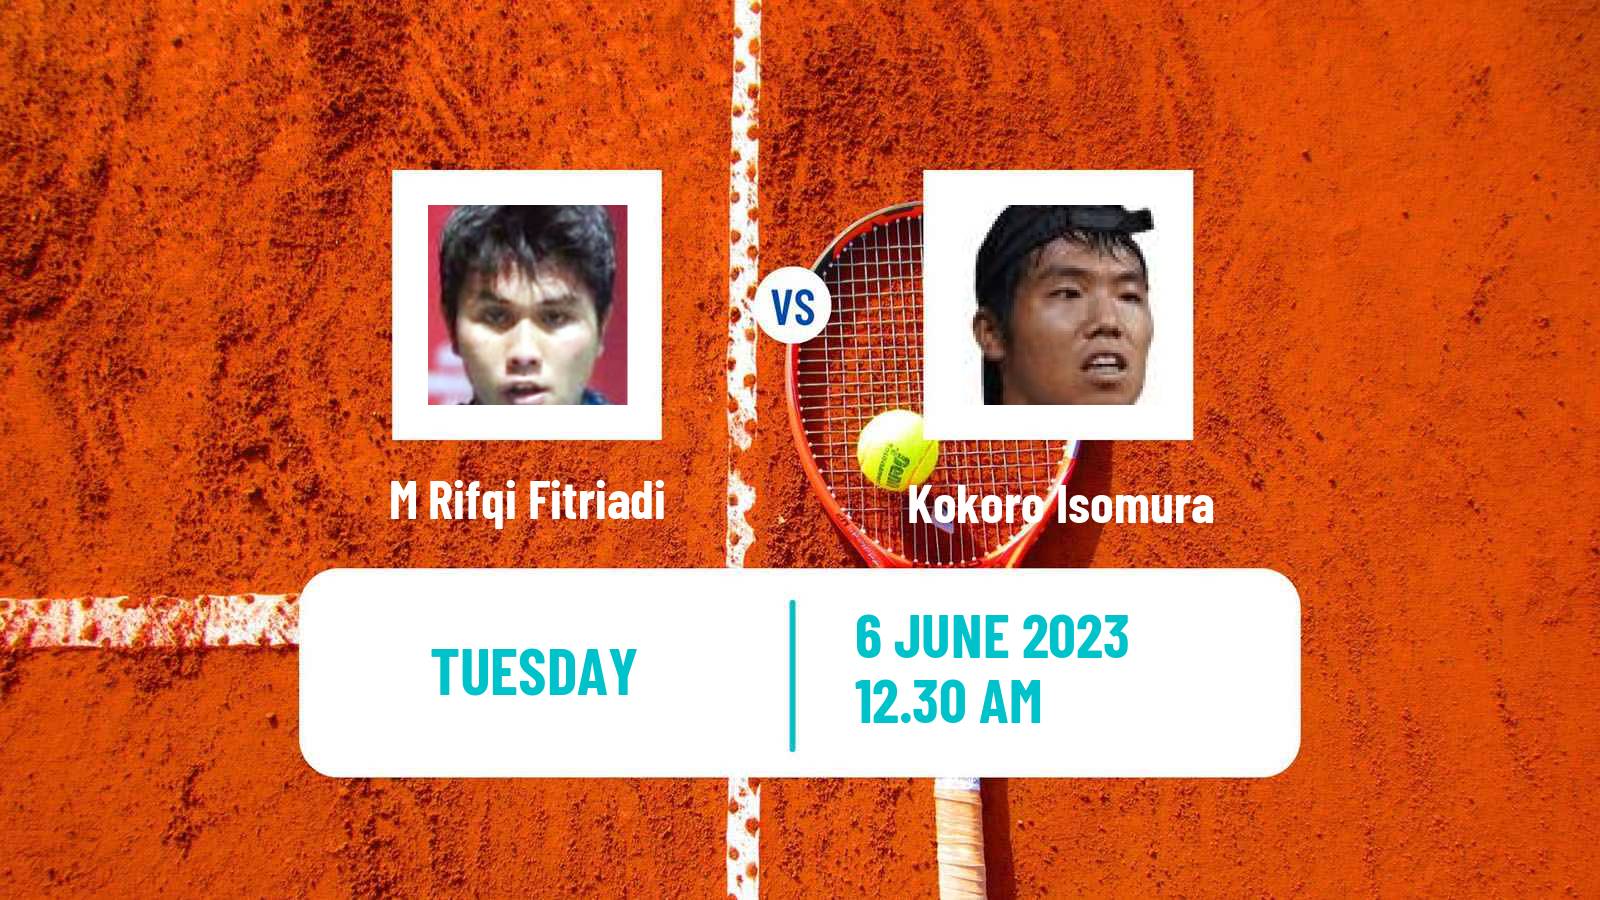 Tennis ITF M25 Jakarta 5 Men M Rifqi Fitriadi - Kokoro Isomura